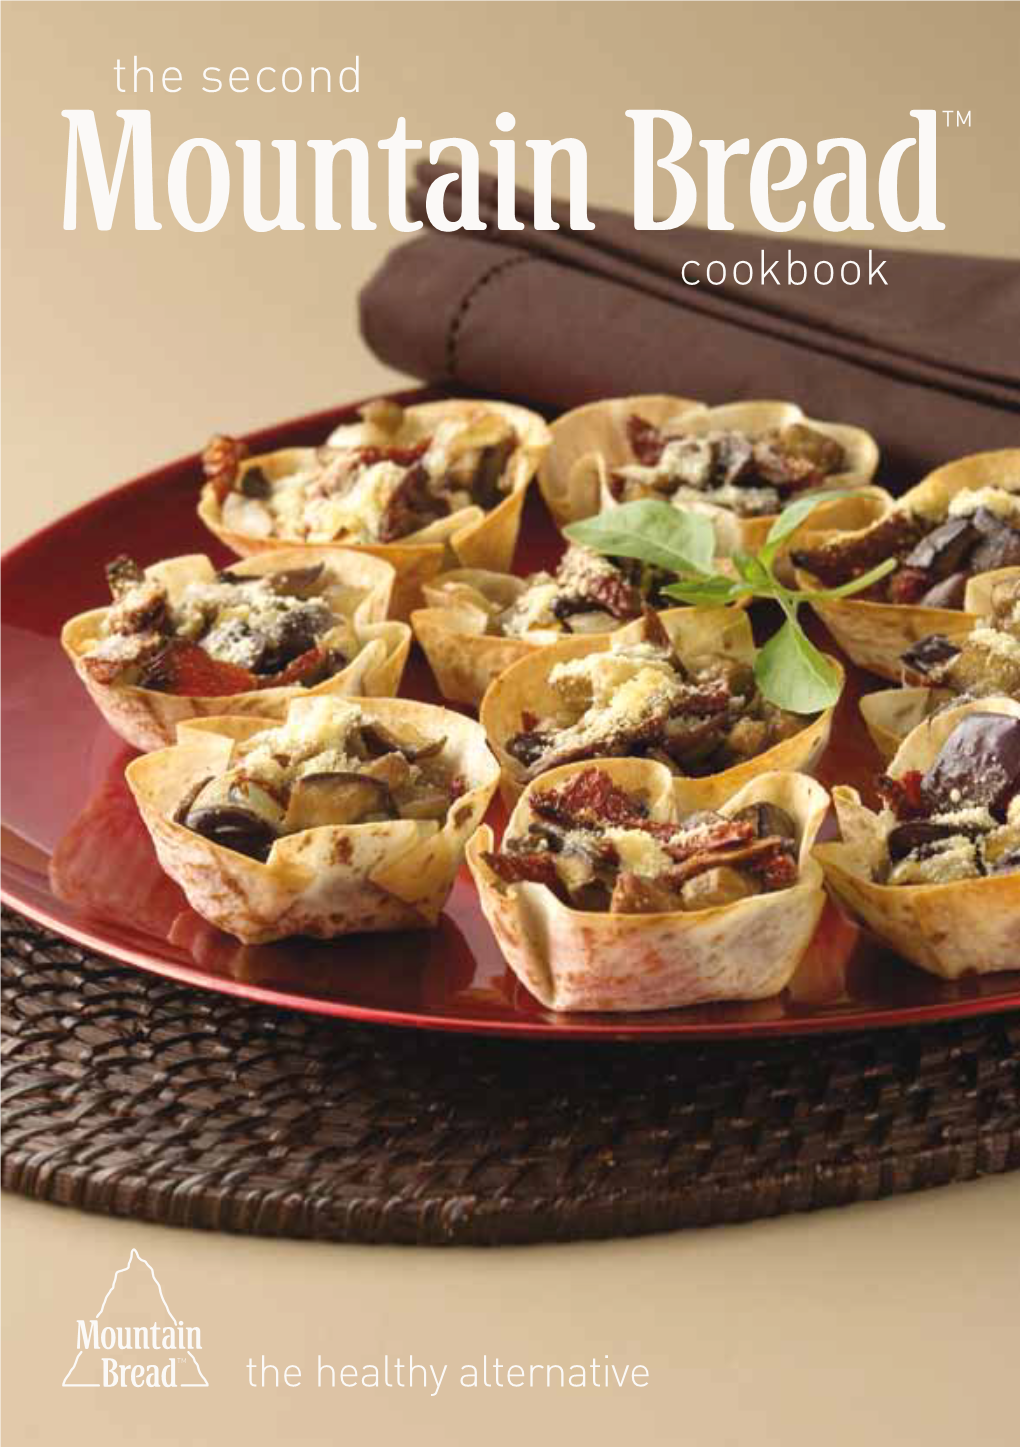 The Second Mountain Breadtm Cookbook